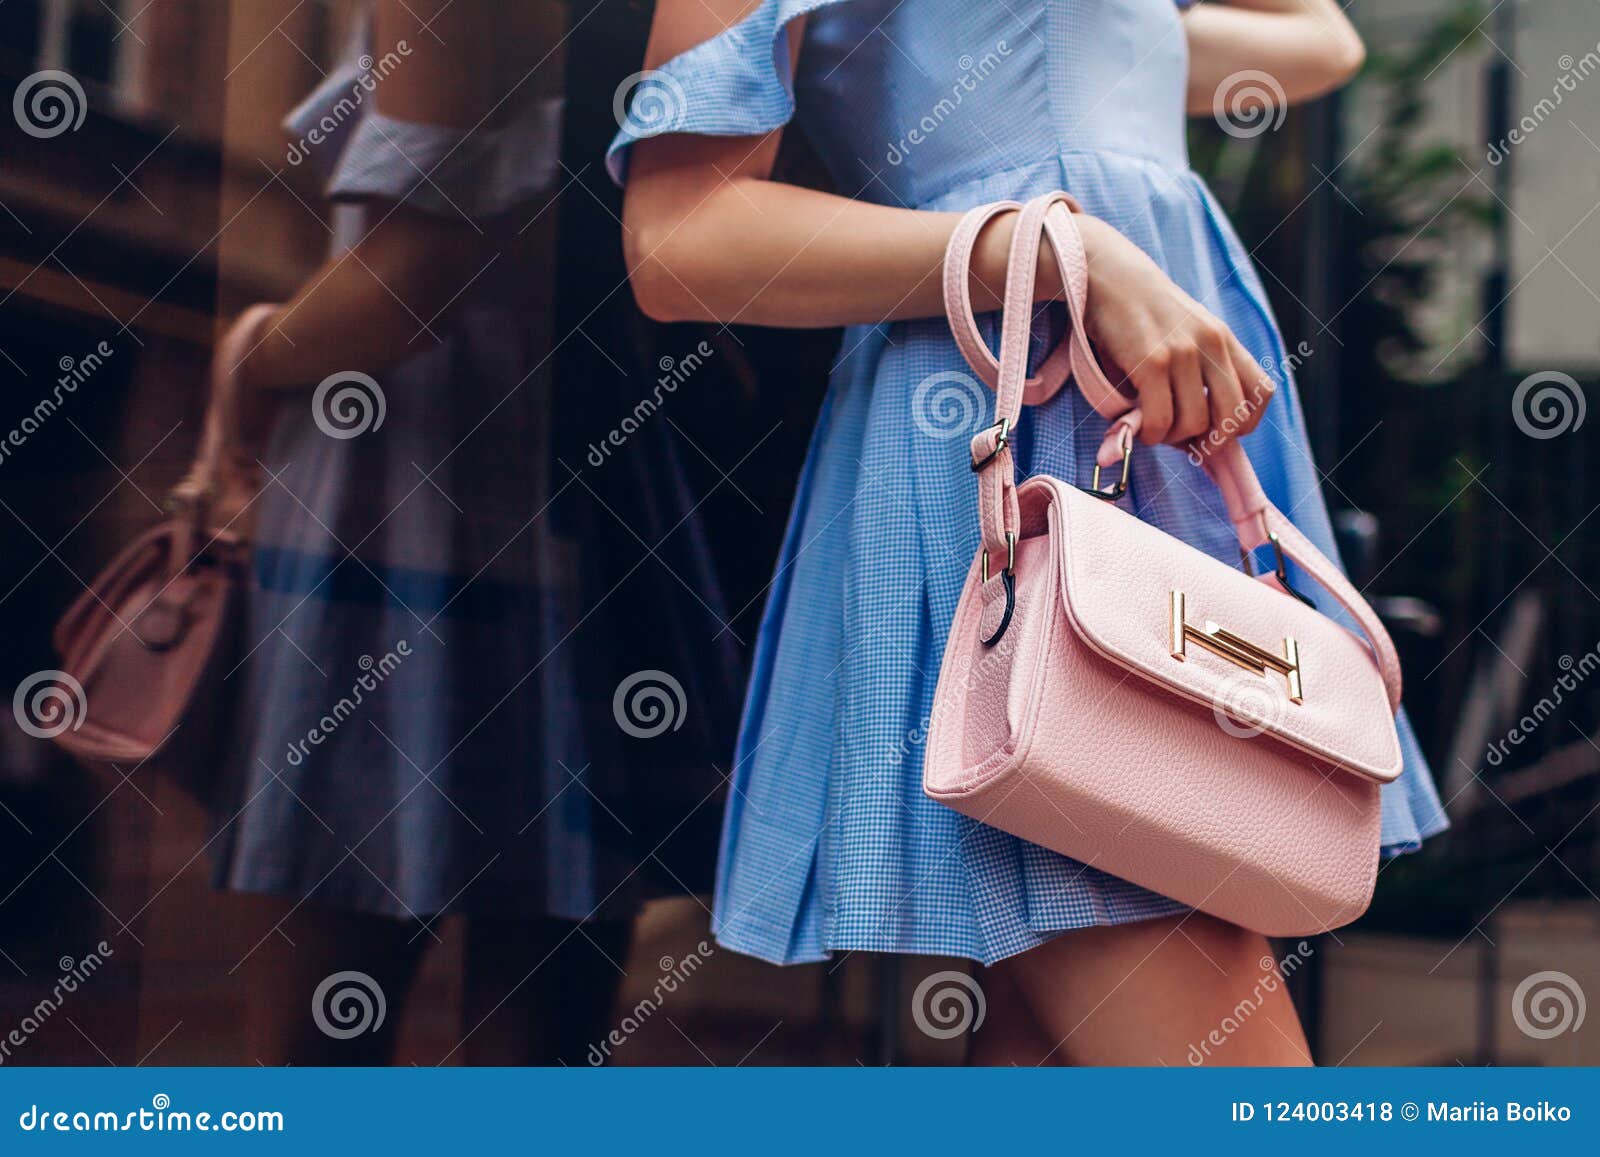 close-up of stylish female handbag. fashionable woman holding beautiful accessories outdoors.